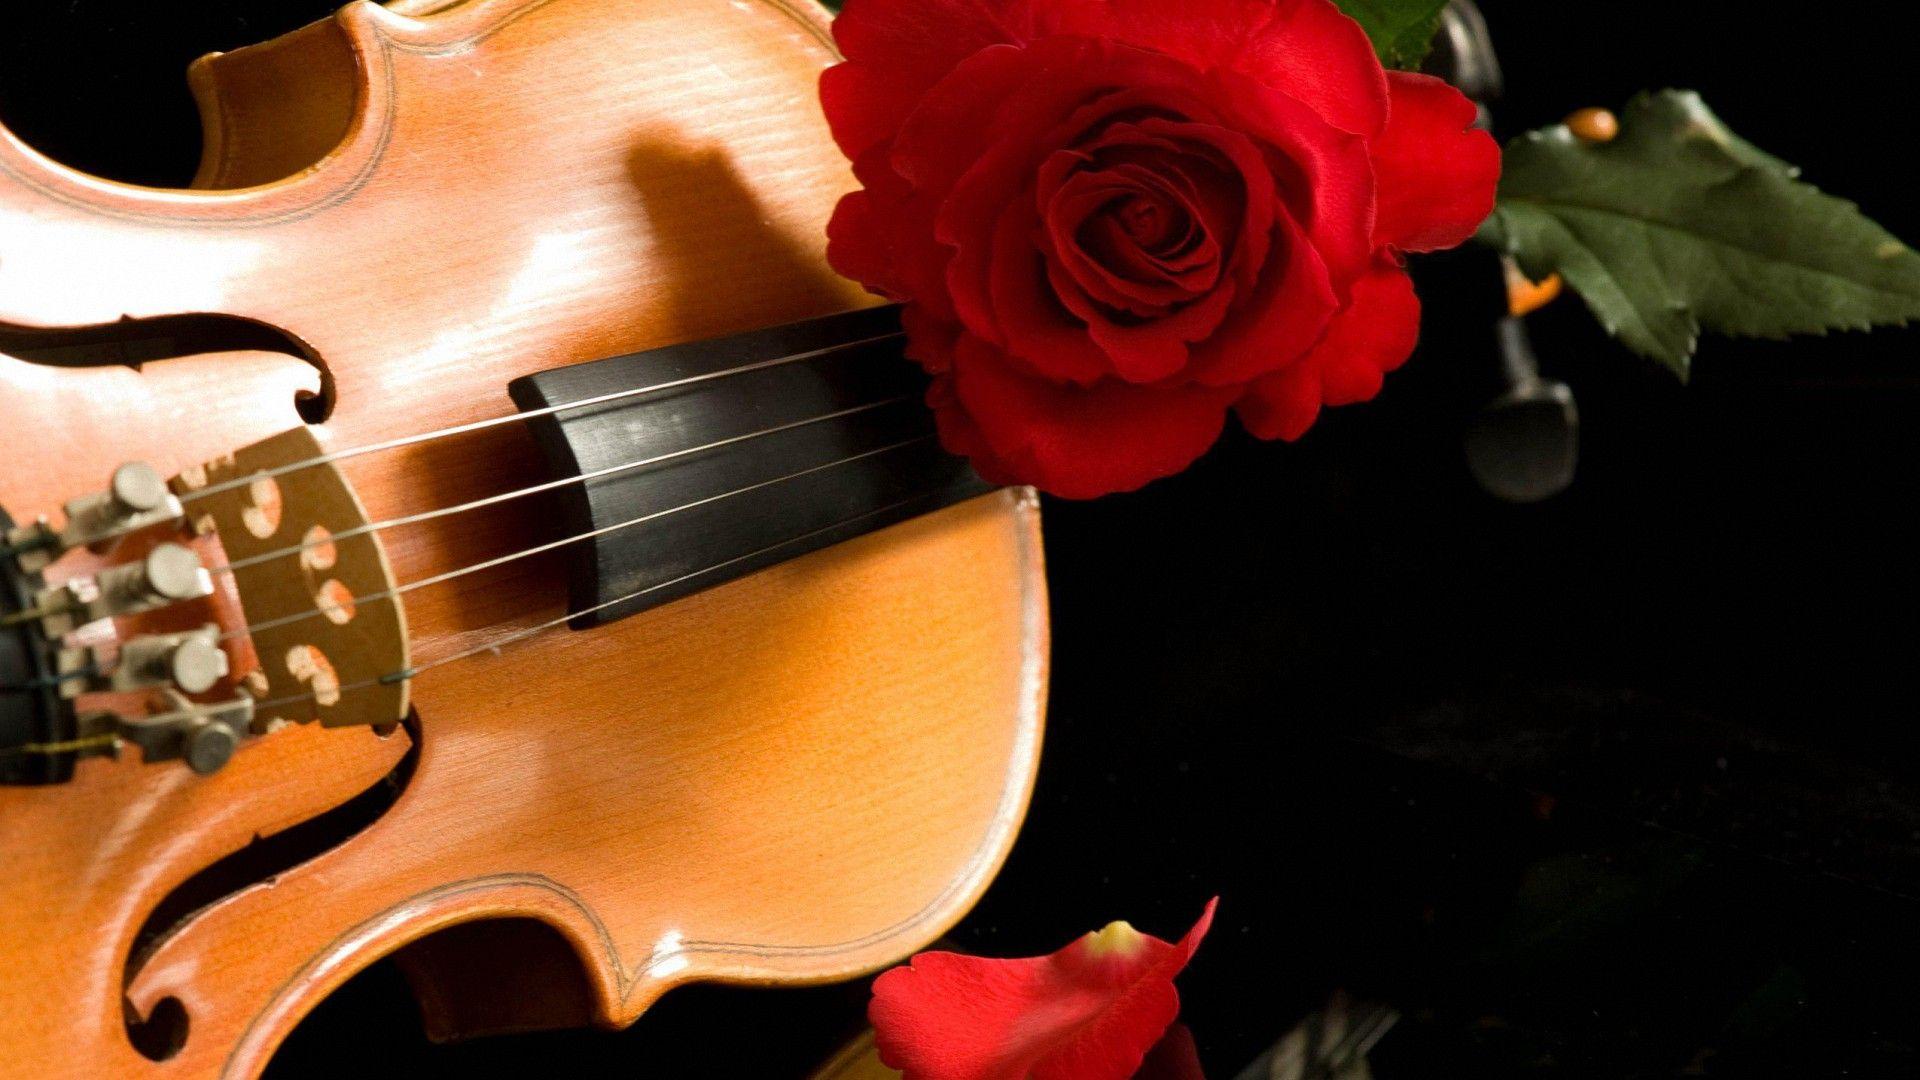 Beautiful Violin Rose 1080P full HD Wallpaper